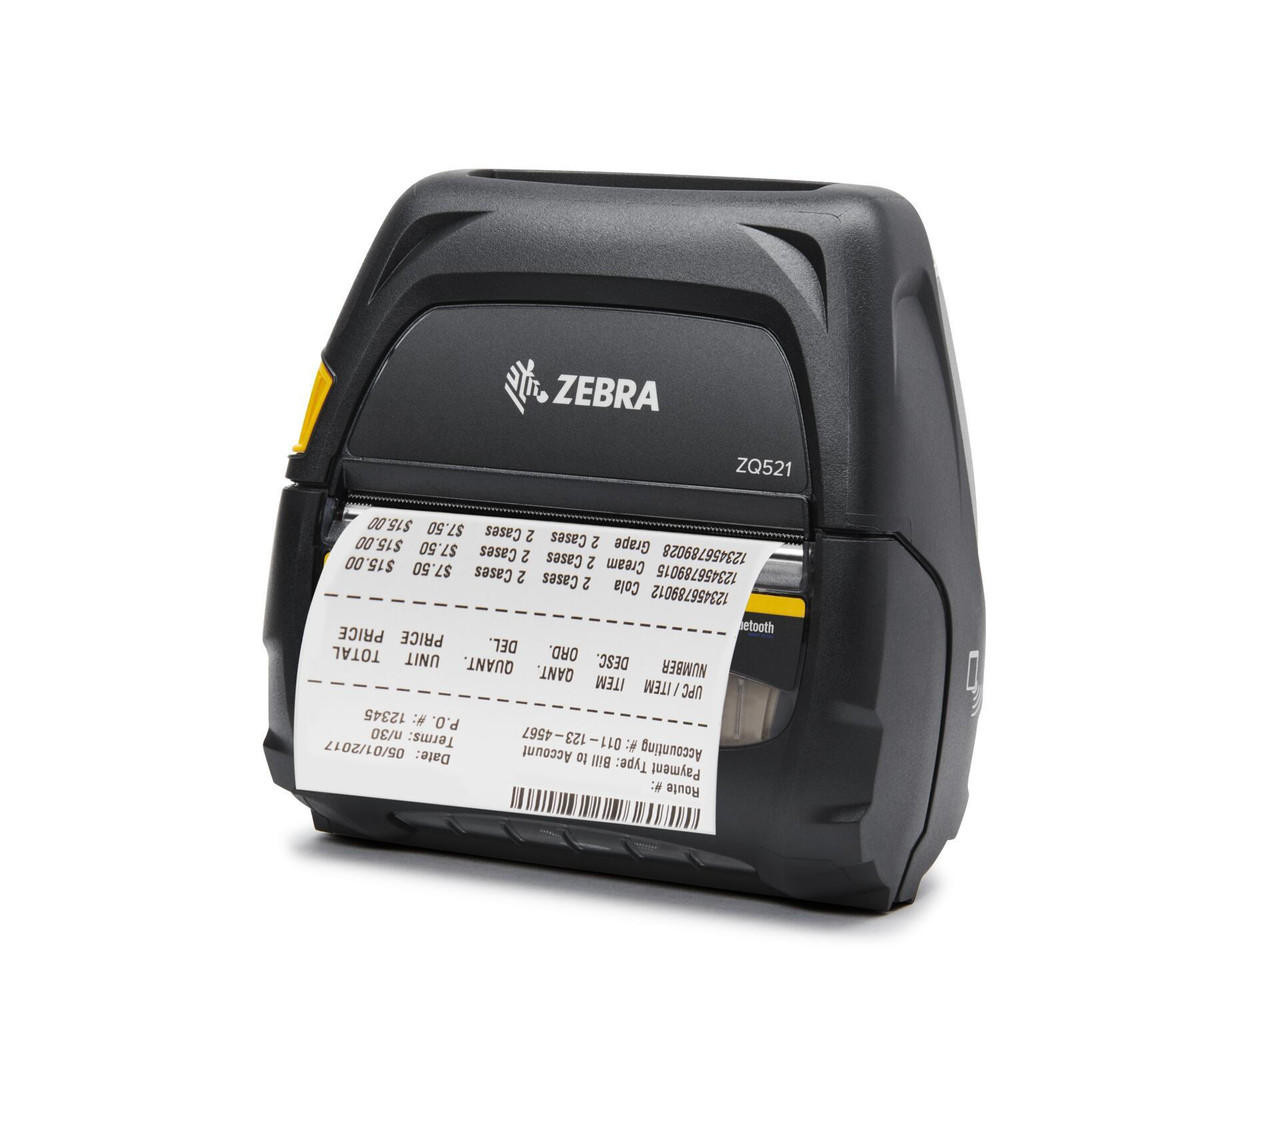 Zebra Zq52 Bue0000 00 Zq521 Premium 4 Inch Mobile Printer 9088